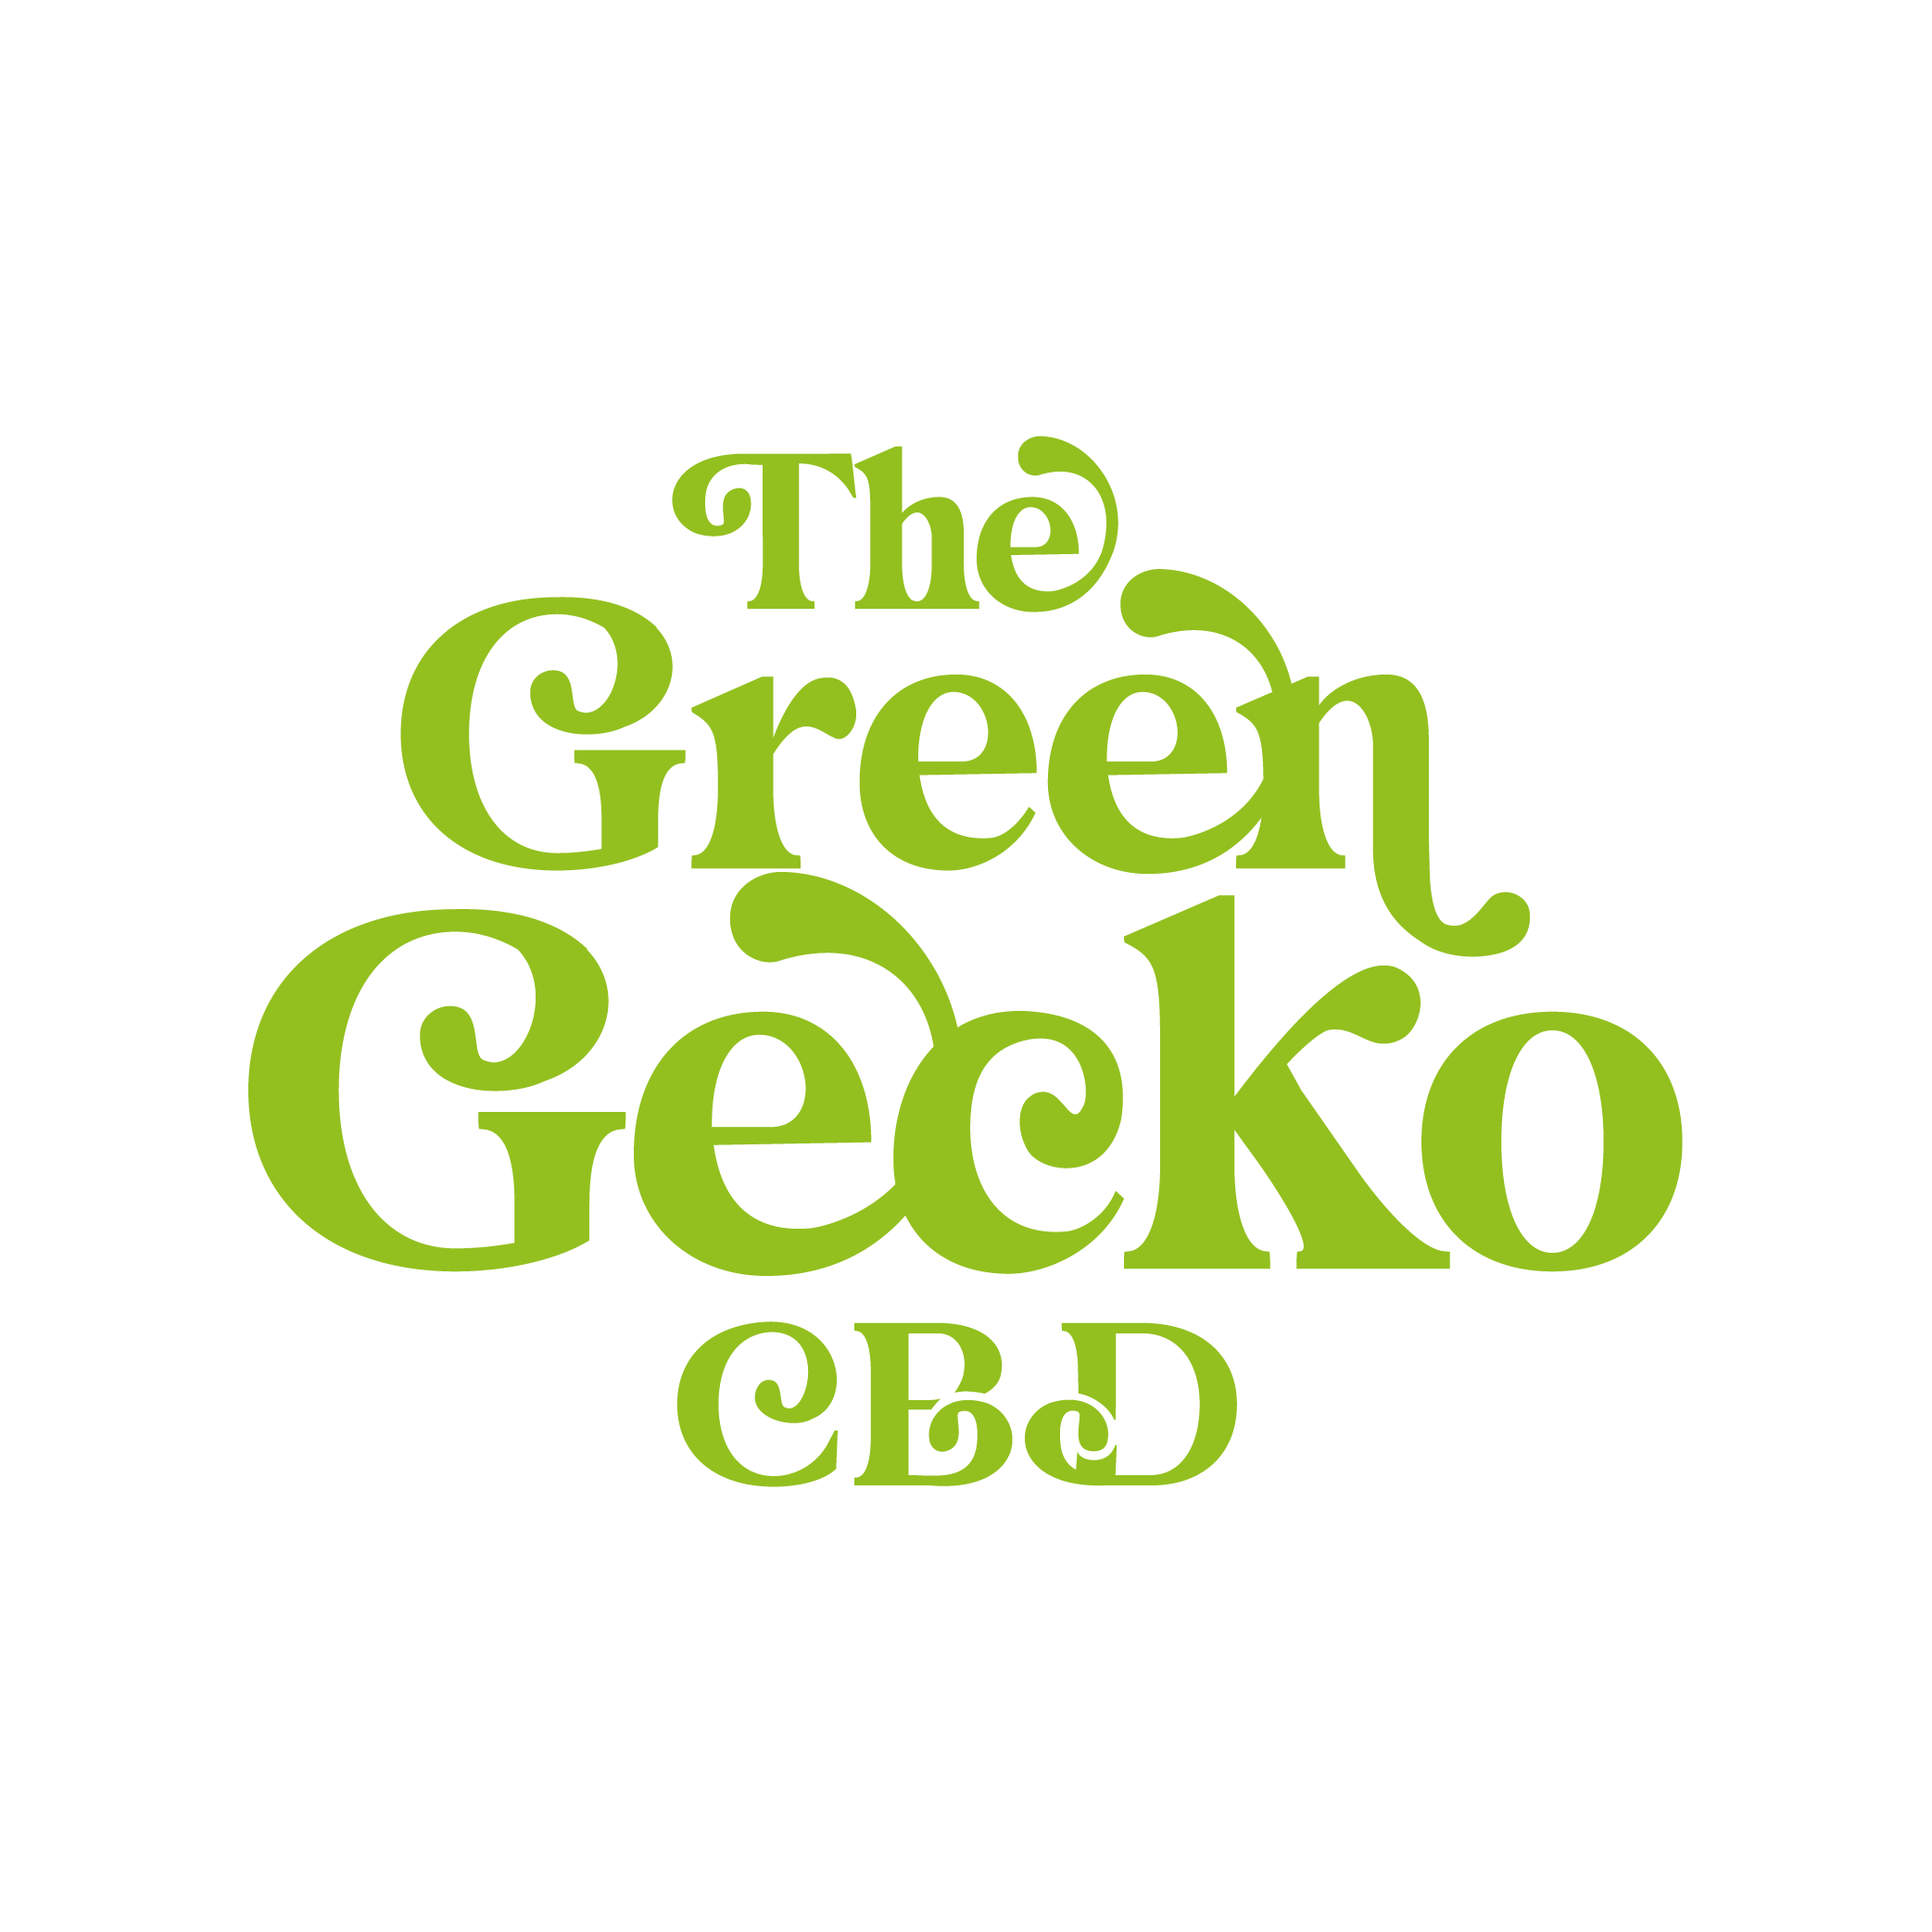 The Green Gecko CBD